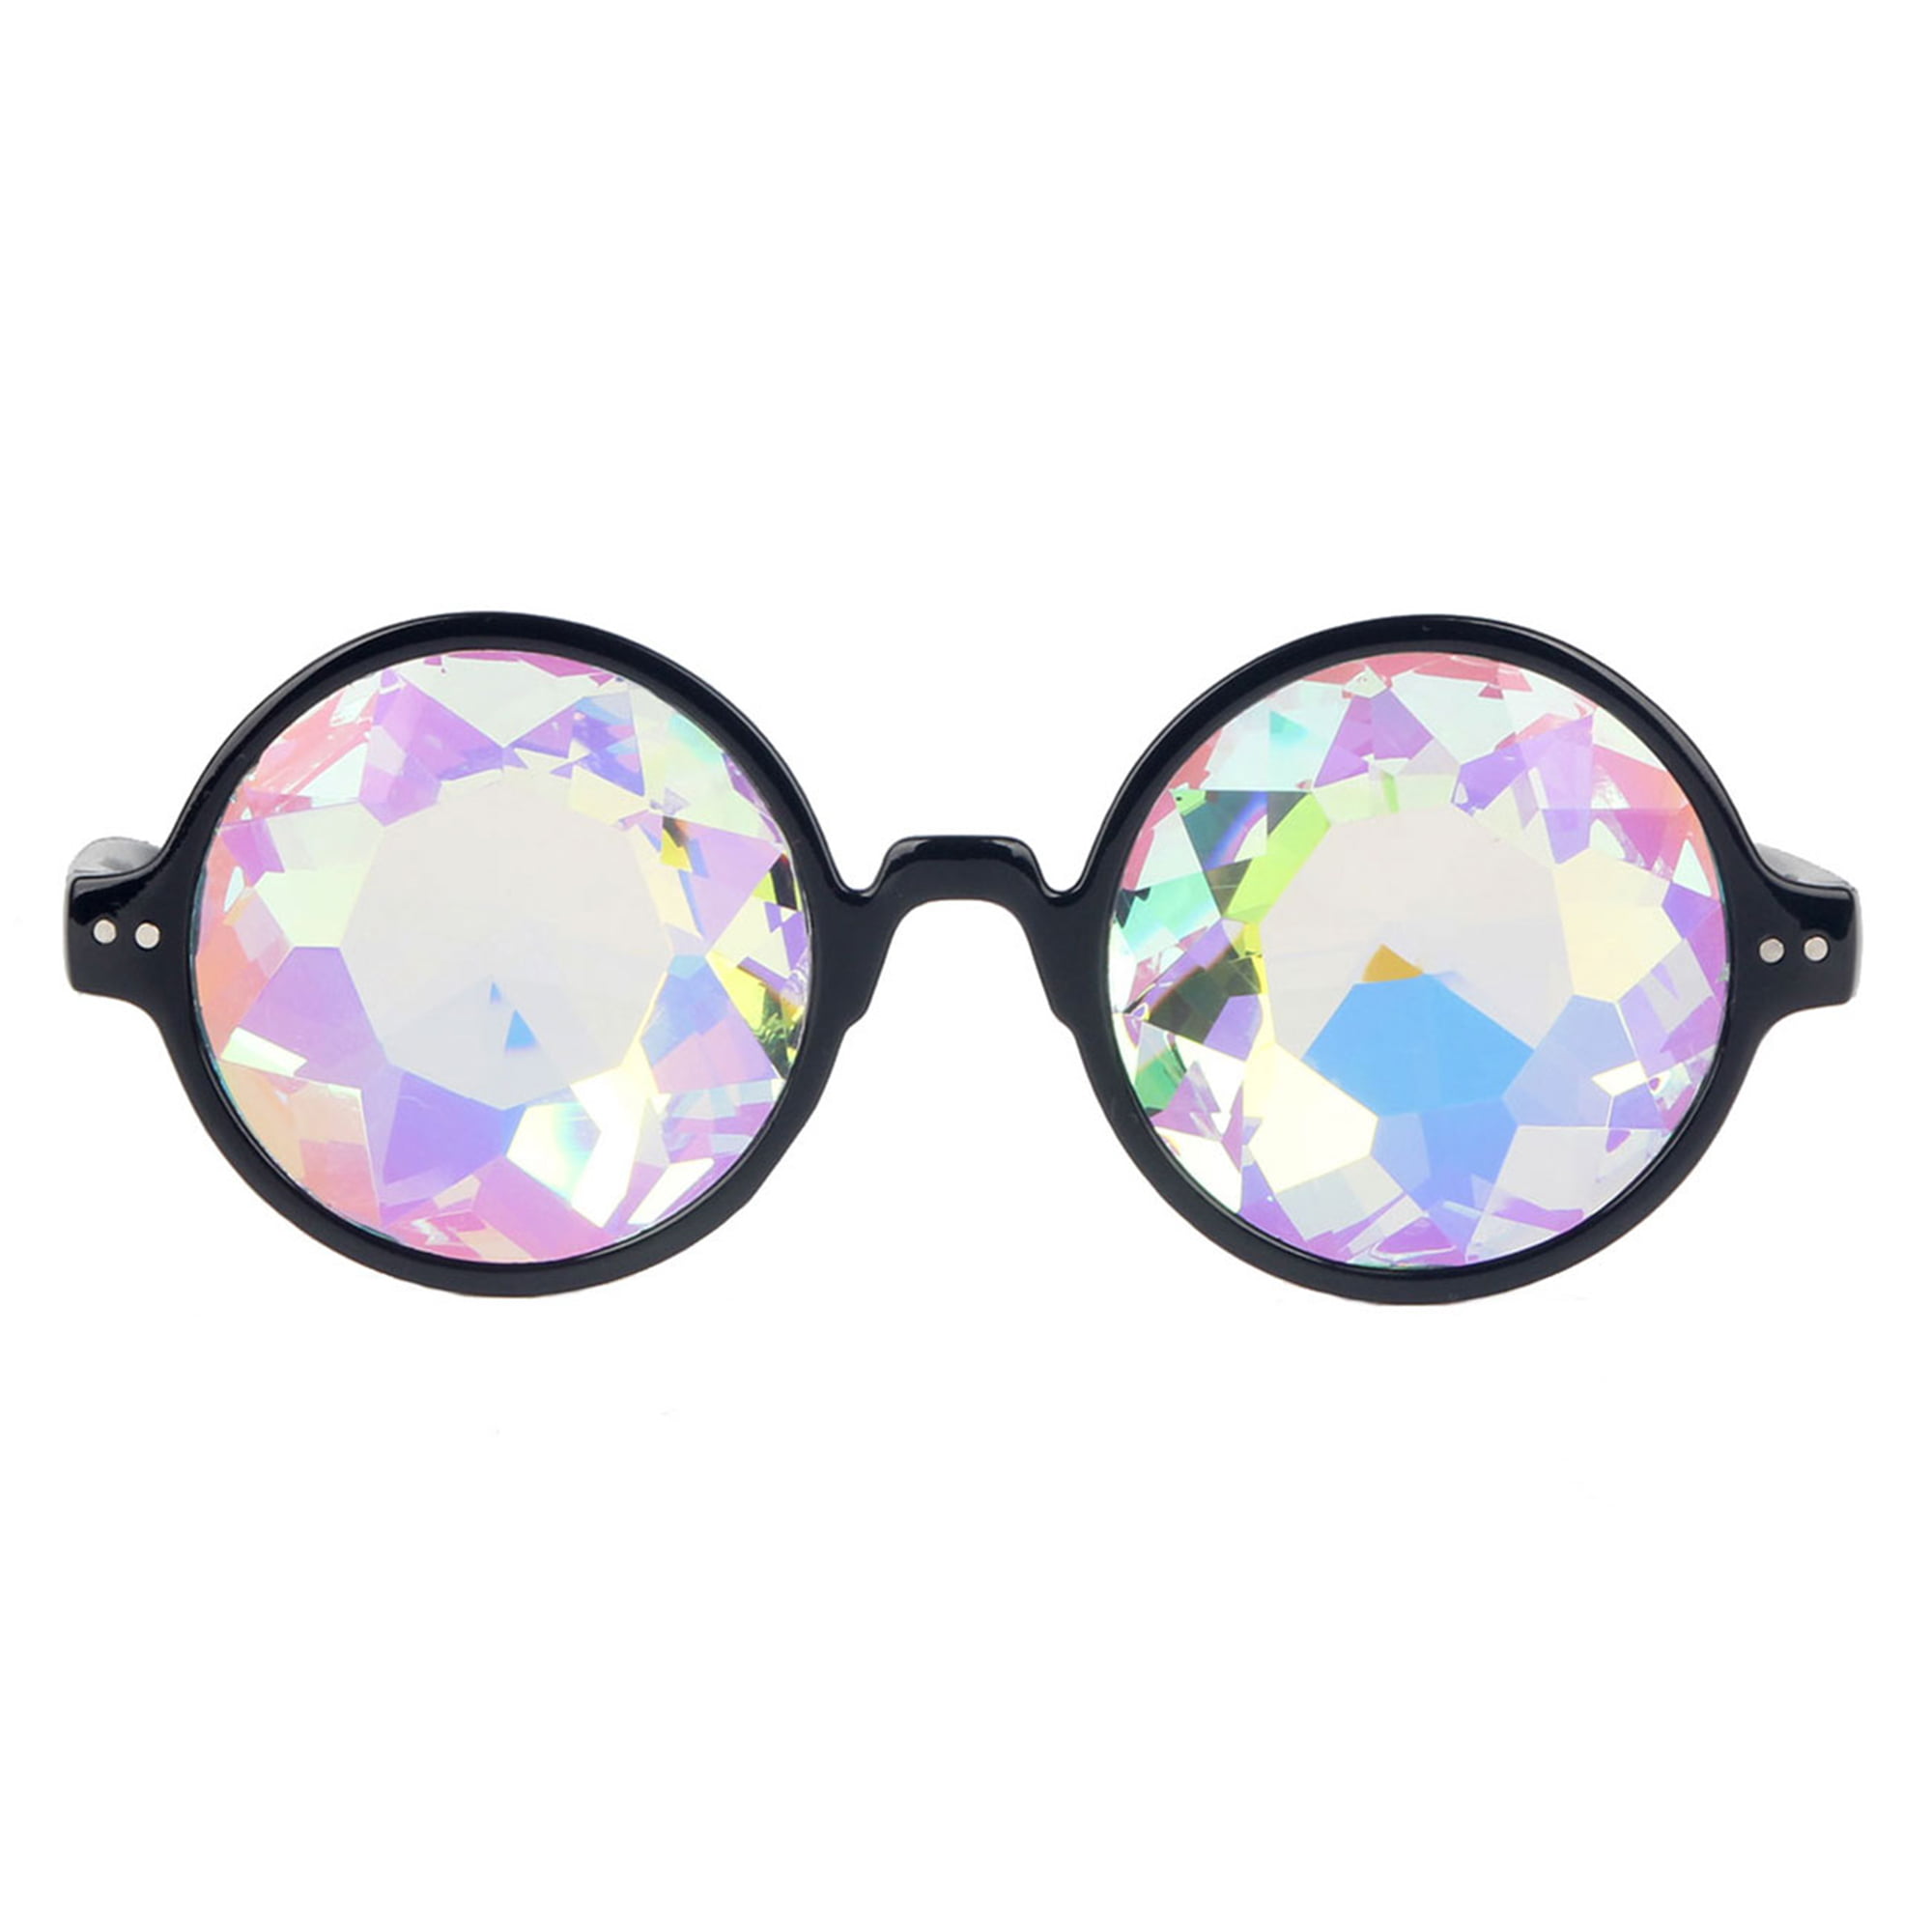 Glasses Festival Prism Sunglasses Goggles for Raves Rainbow Prism Diffraction Crystal Lenses - Walmart.com